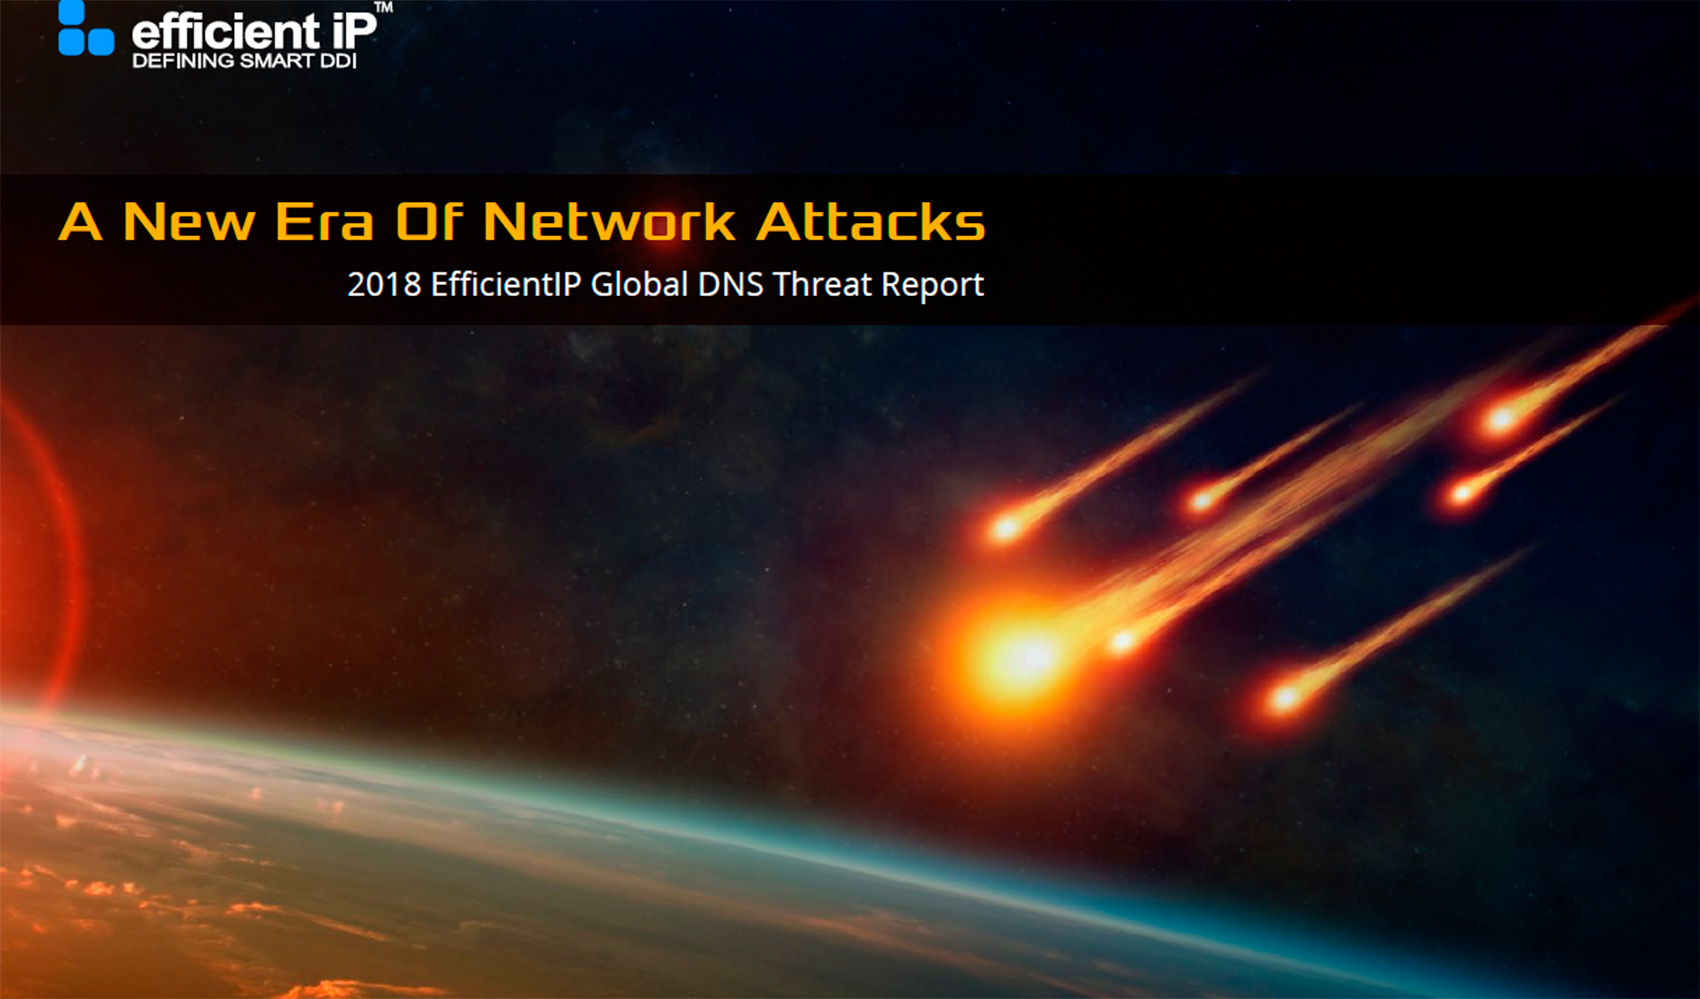 El Informe Global de Amenazas DNS de EfficientIP revela una nueva era de ataques de red